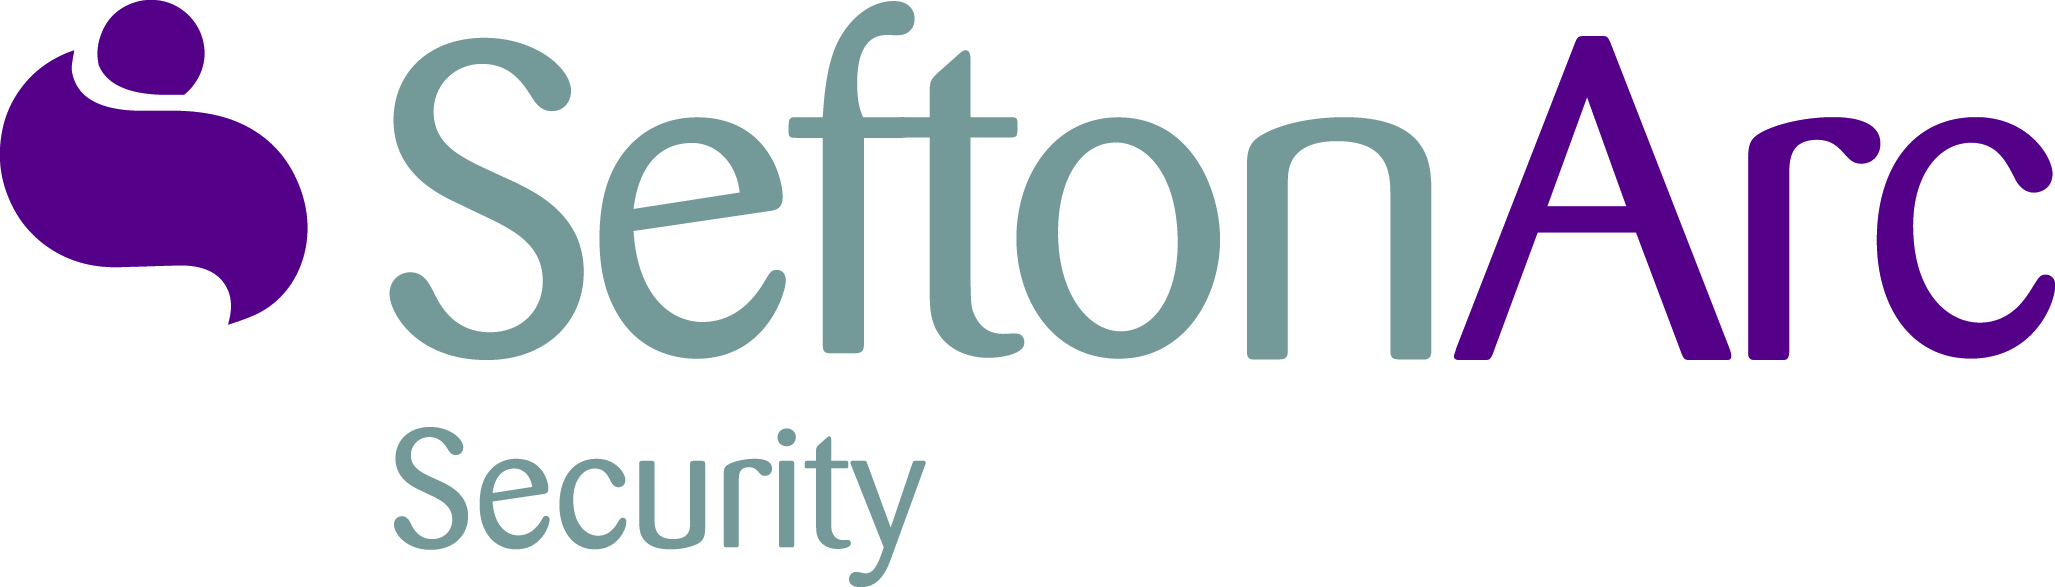 SeftonArc Security